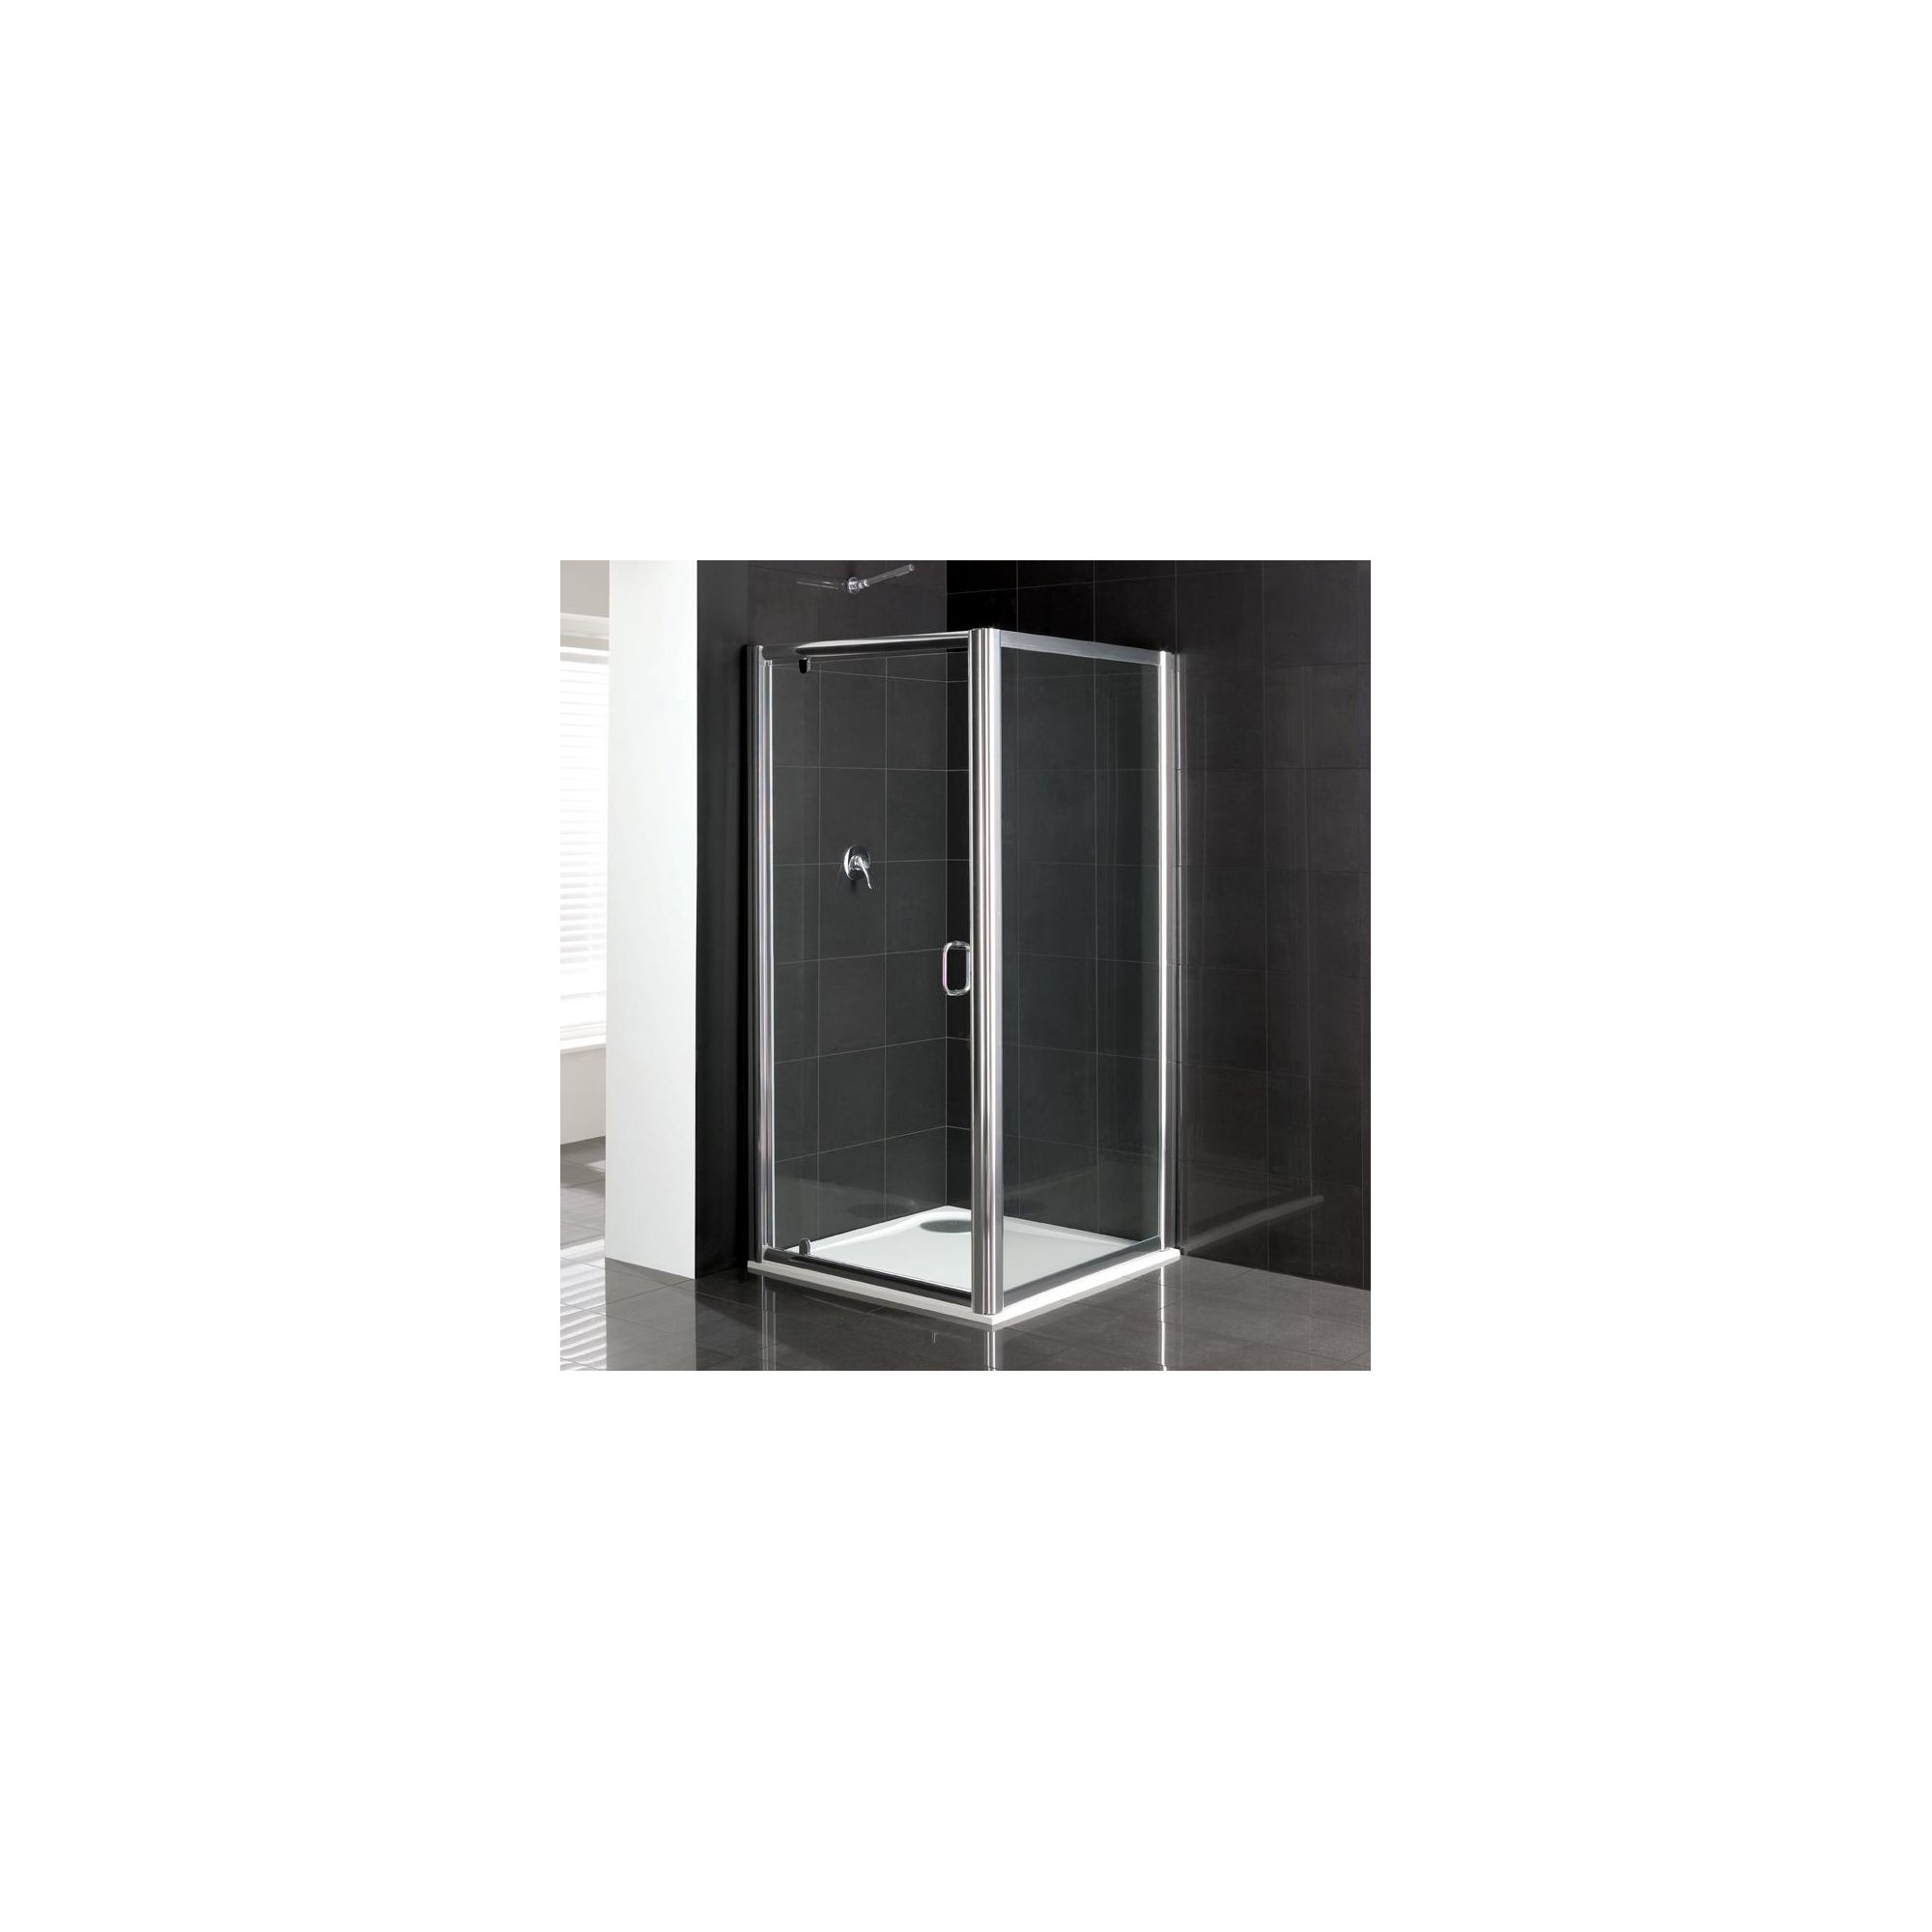 Duchy Elite Silver Pivot Door Shower Enclosure, 1000mm x 800mm, Standard Tray, 6mm Glass at Tesco Direct